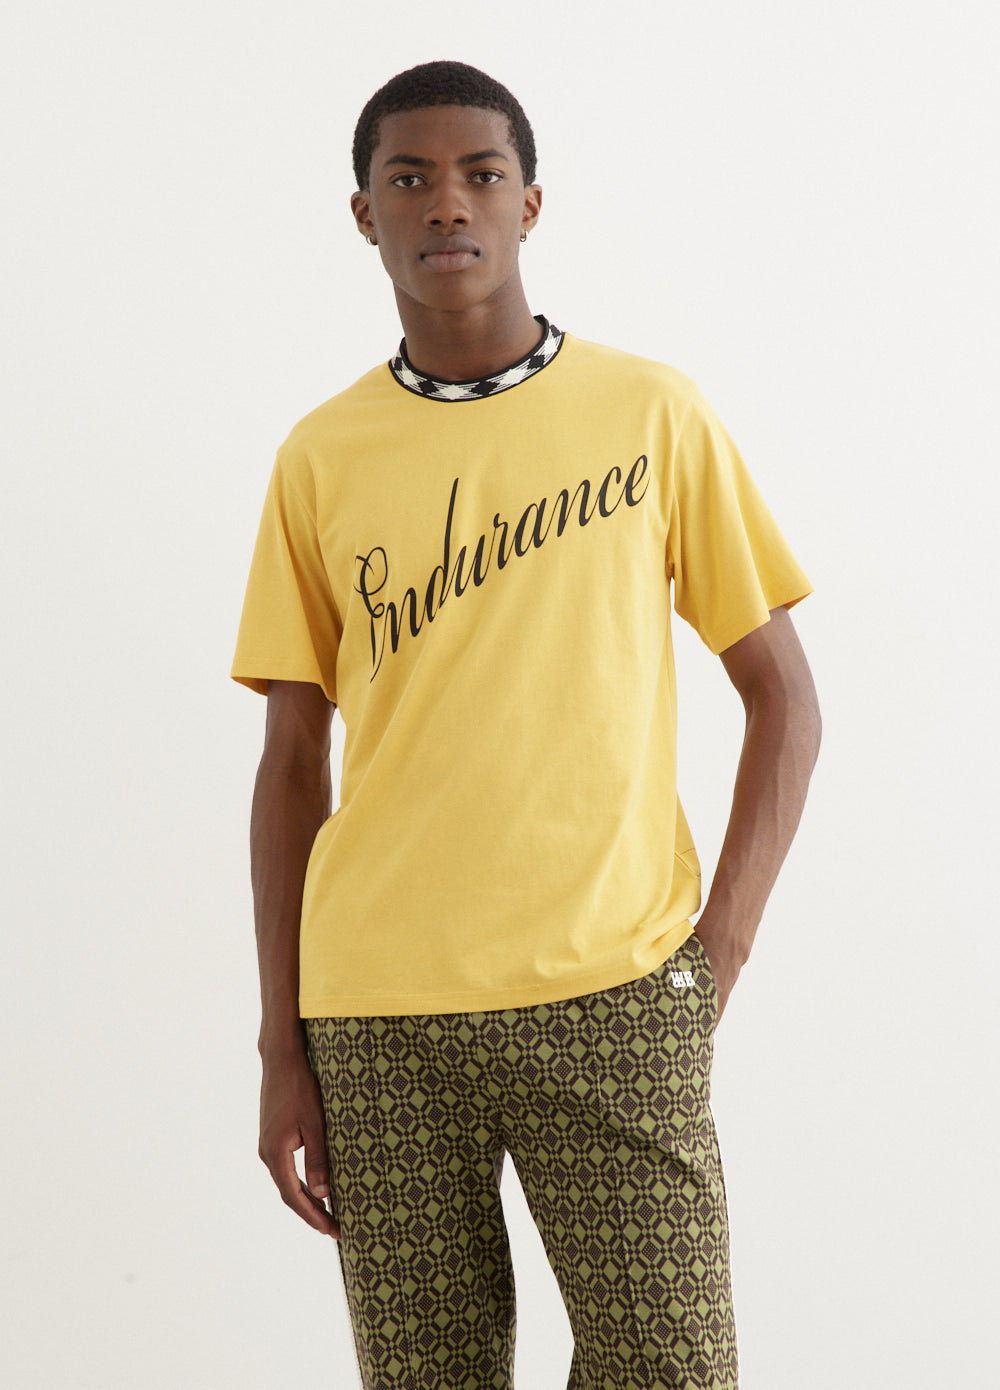 Endurance T-Shirt